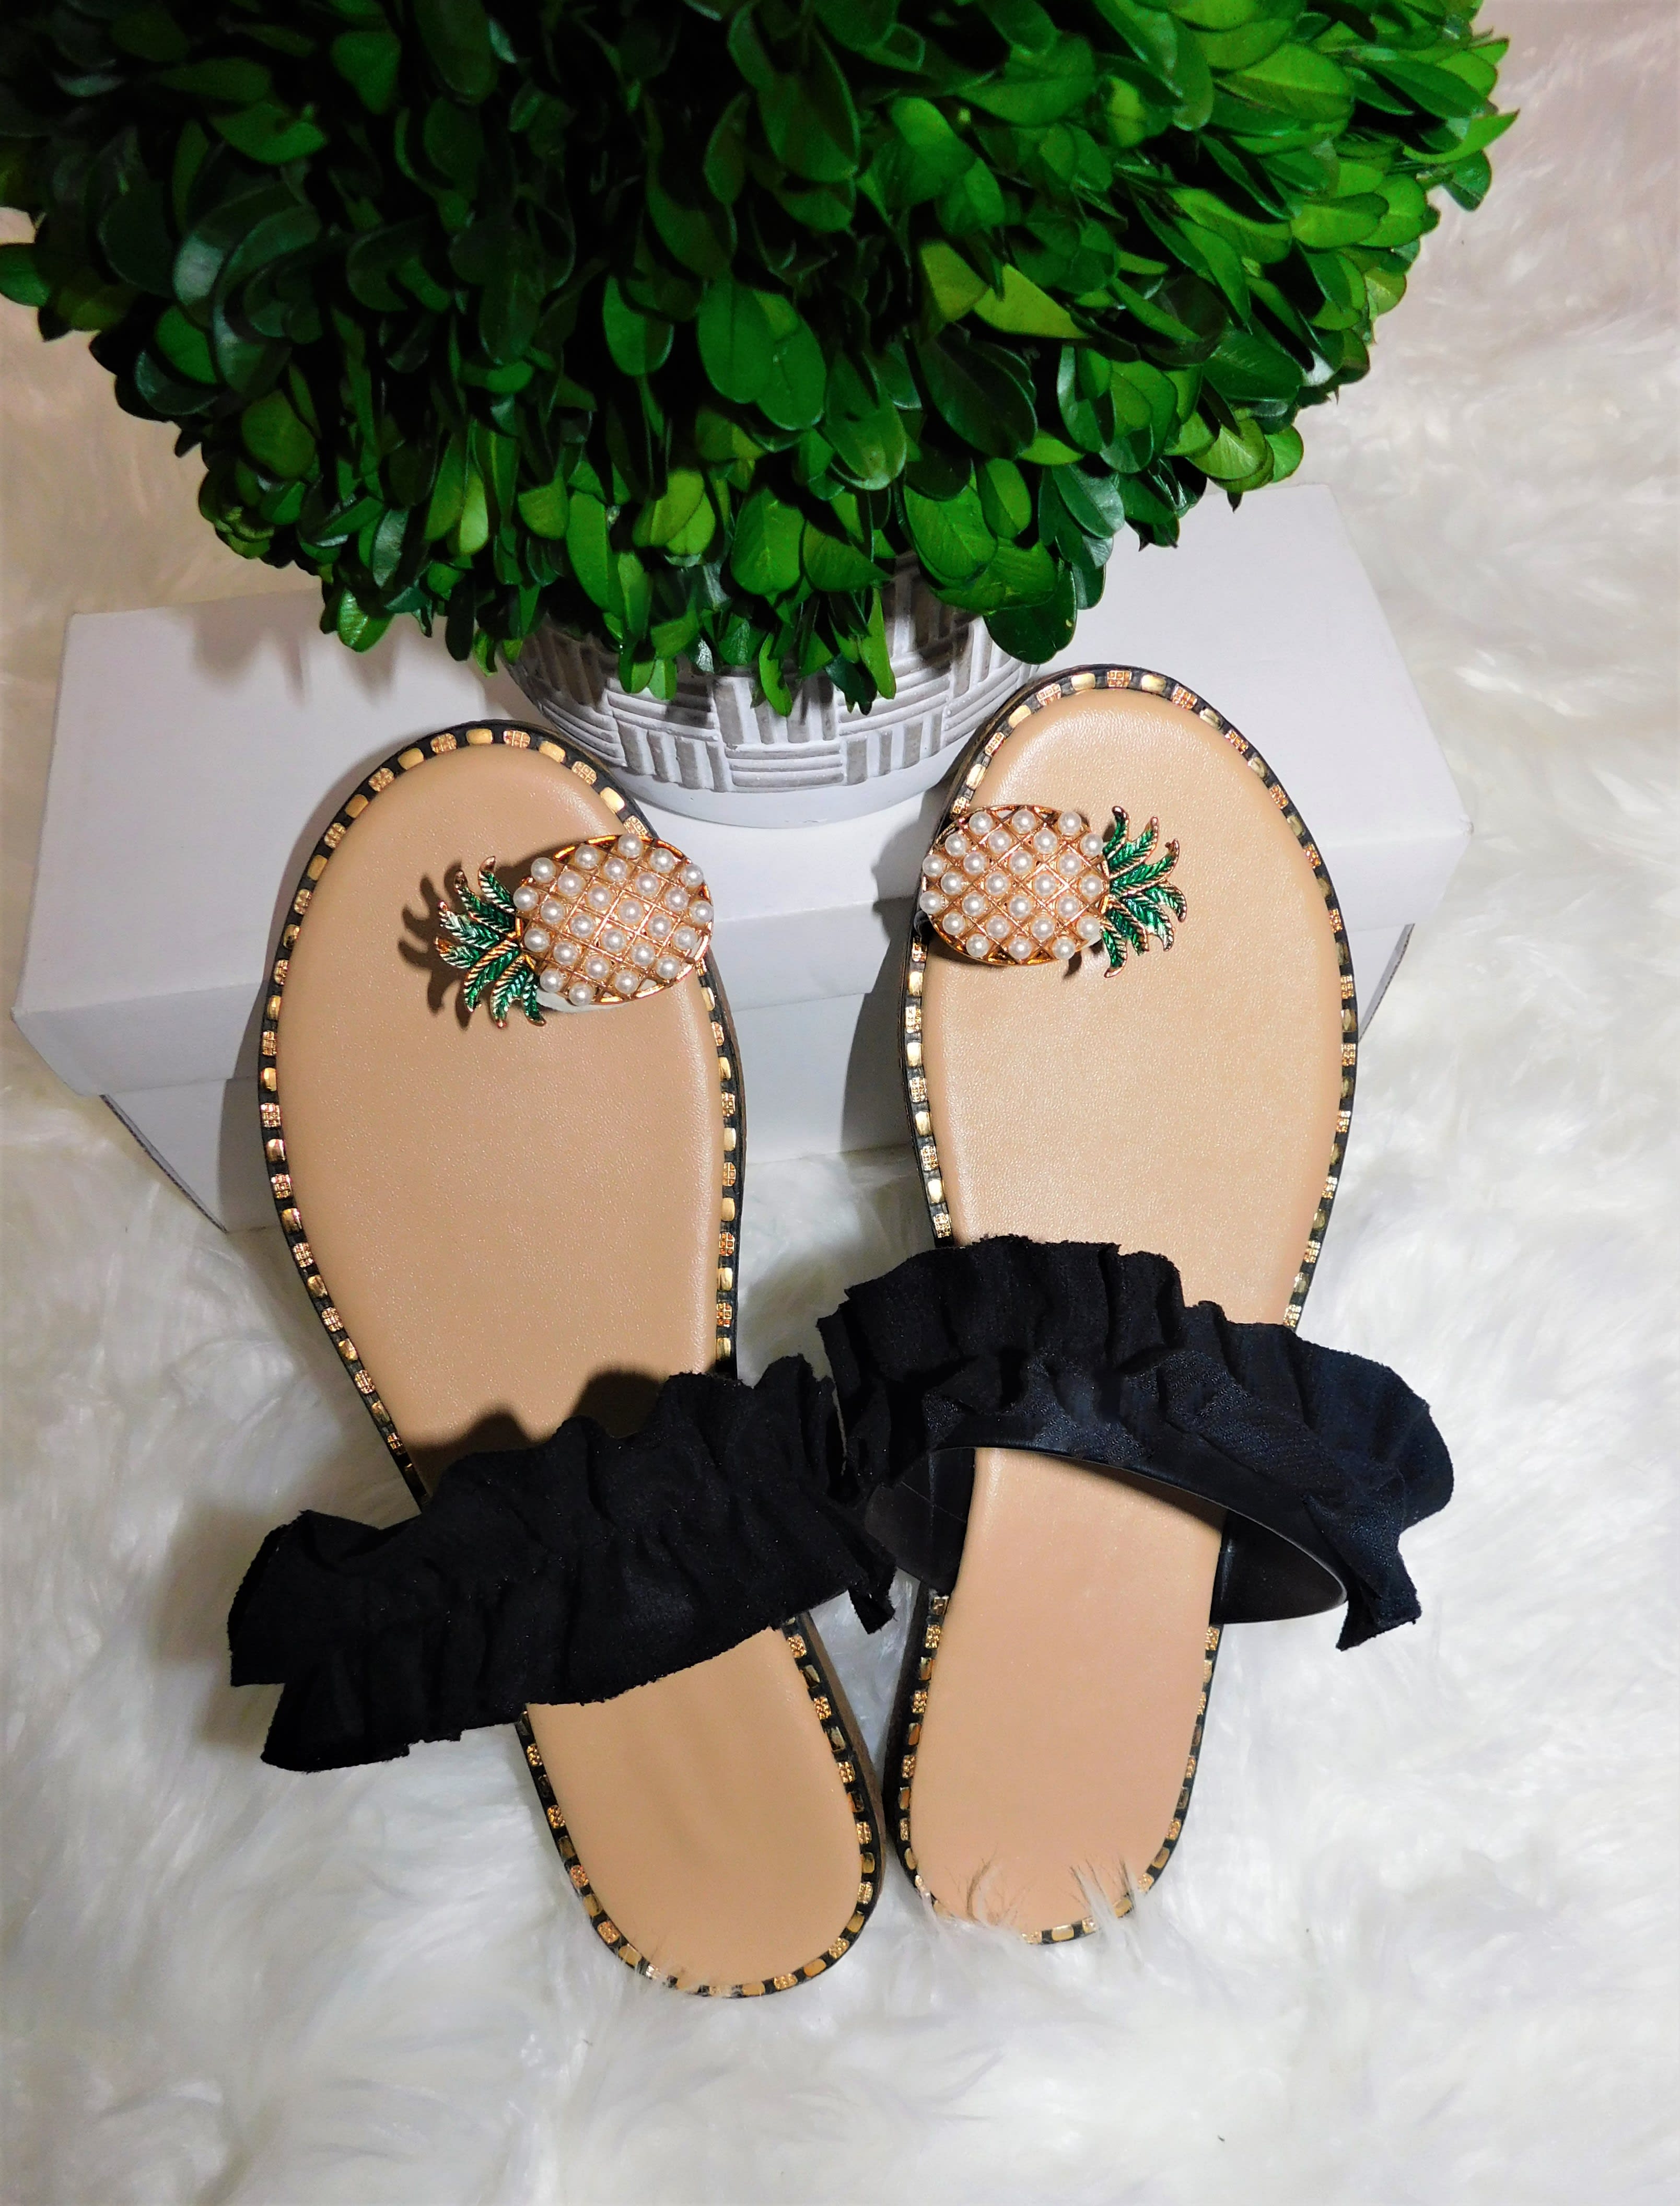 pineapple toe sandals